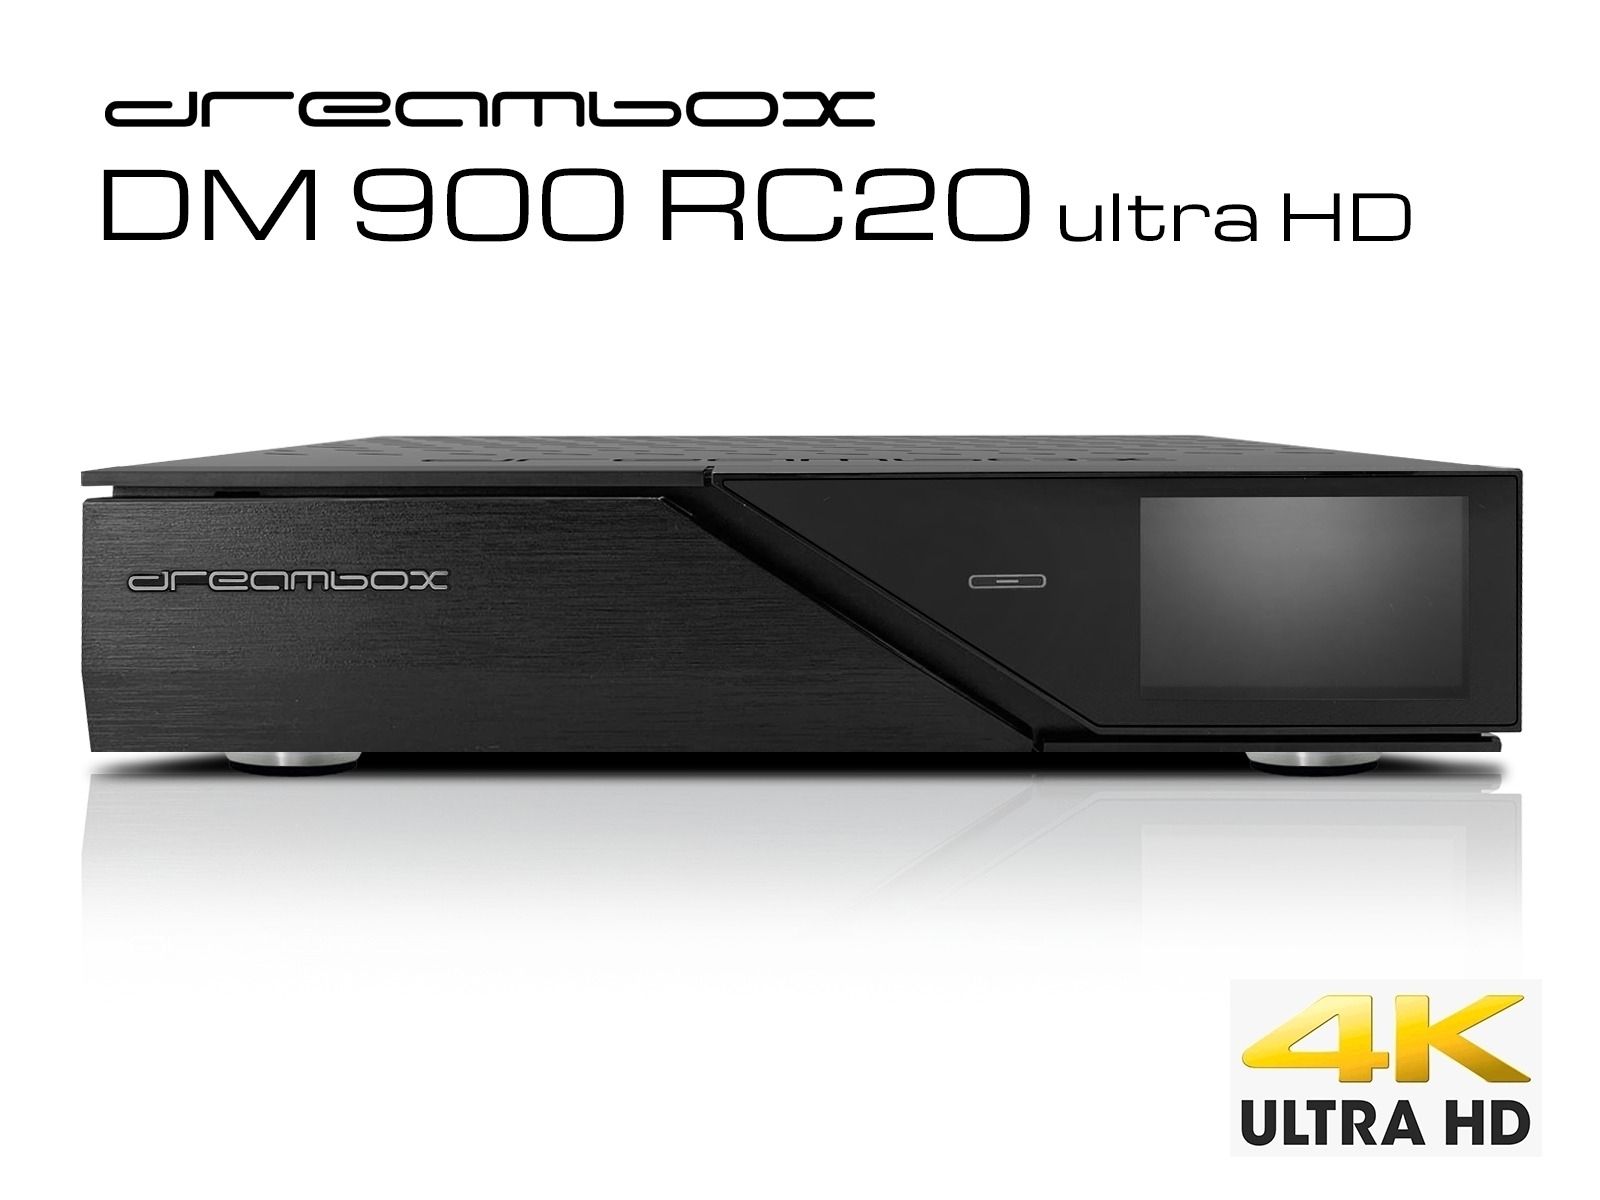 Dreambox DM900 RC20 UHD 4K  1x Dual DVB-S2X MS Tuner 1 TB HDD E2 Linux PVR Receiver von Dreambox